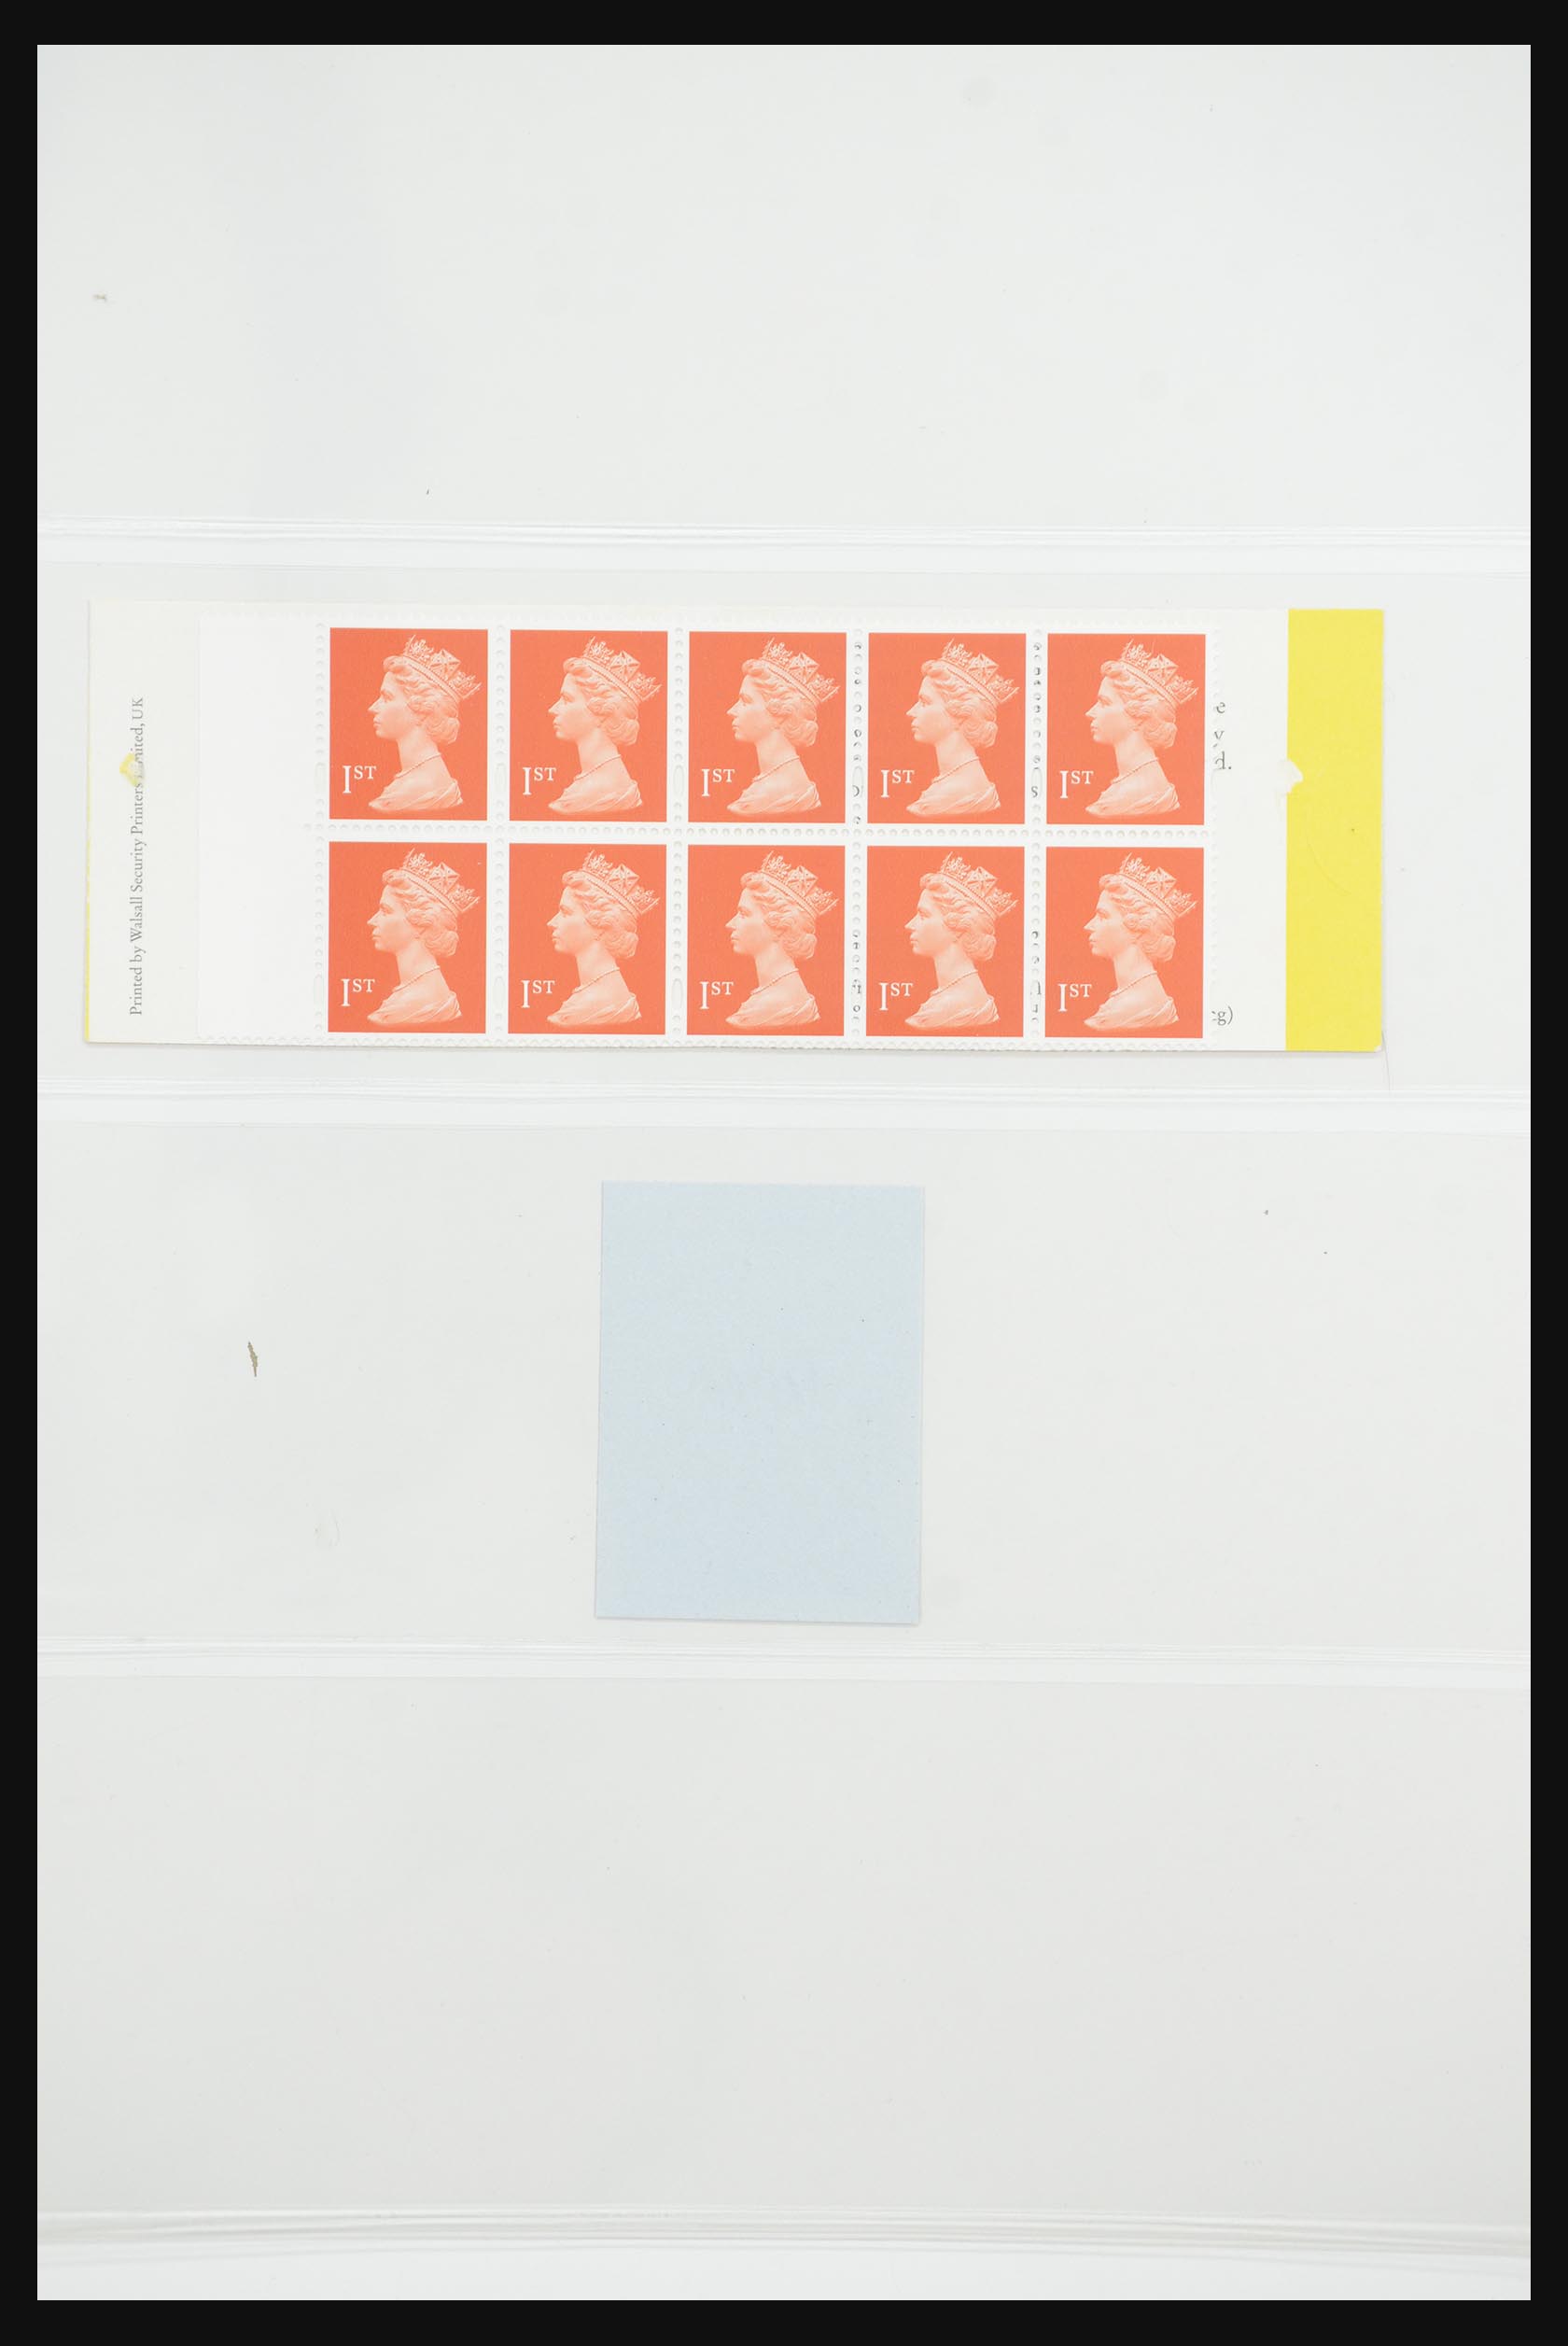 31960 164 - 31960 Great Britain stampbooklets 1989-2000.